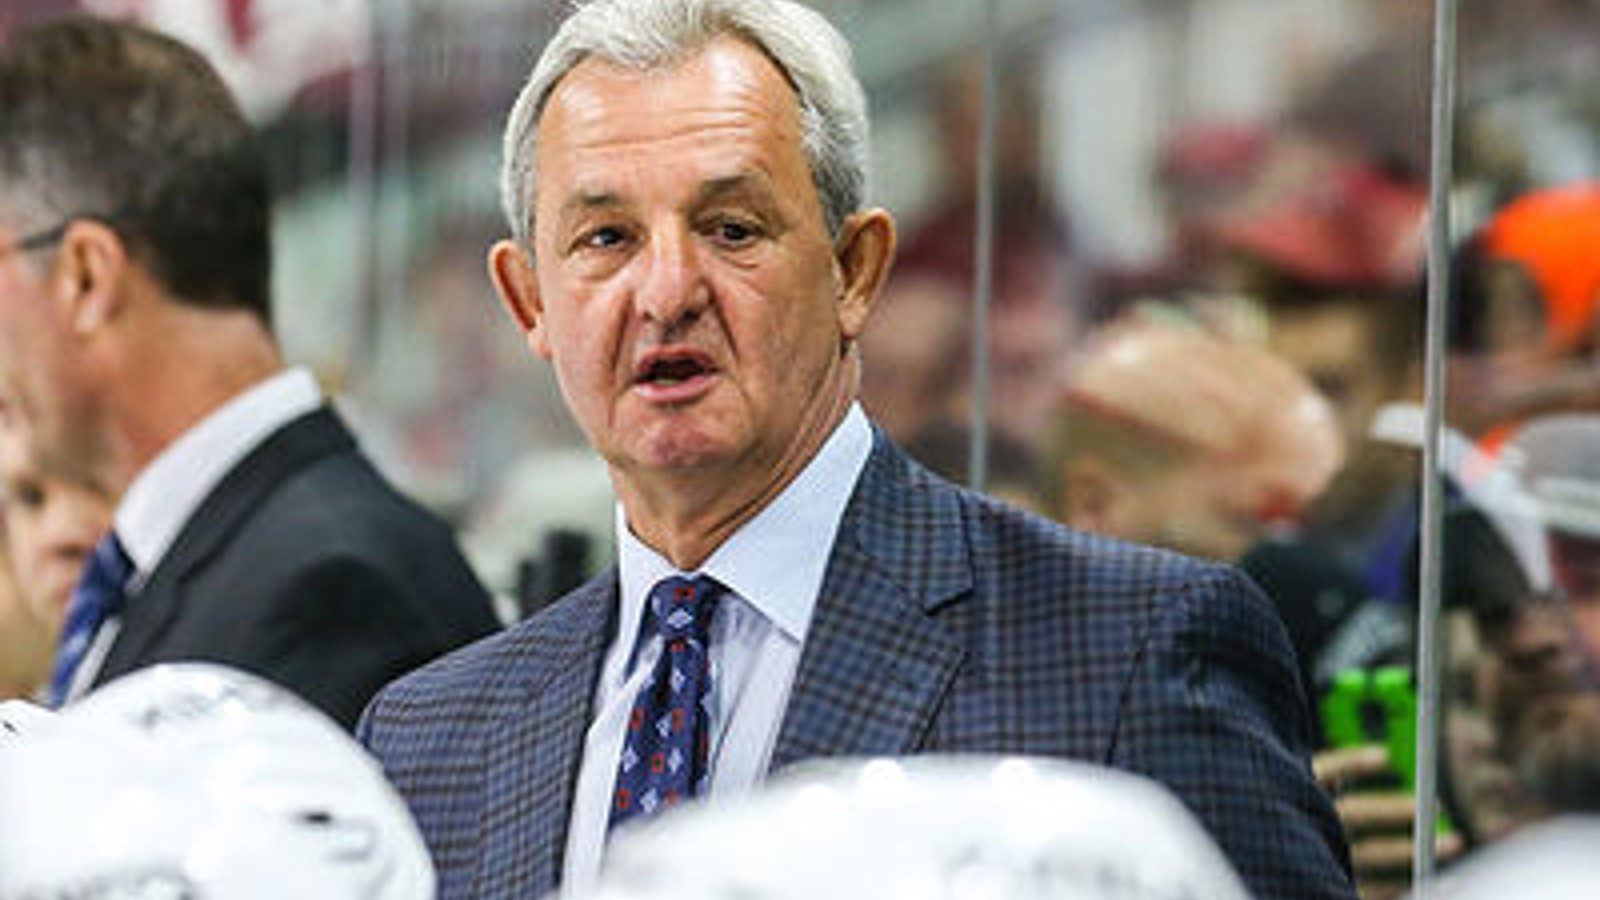 Breaking: Darryl Sutter back in a coaching role in the NHL! 